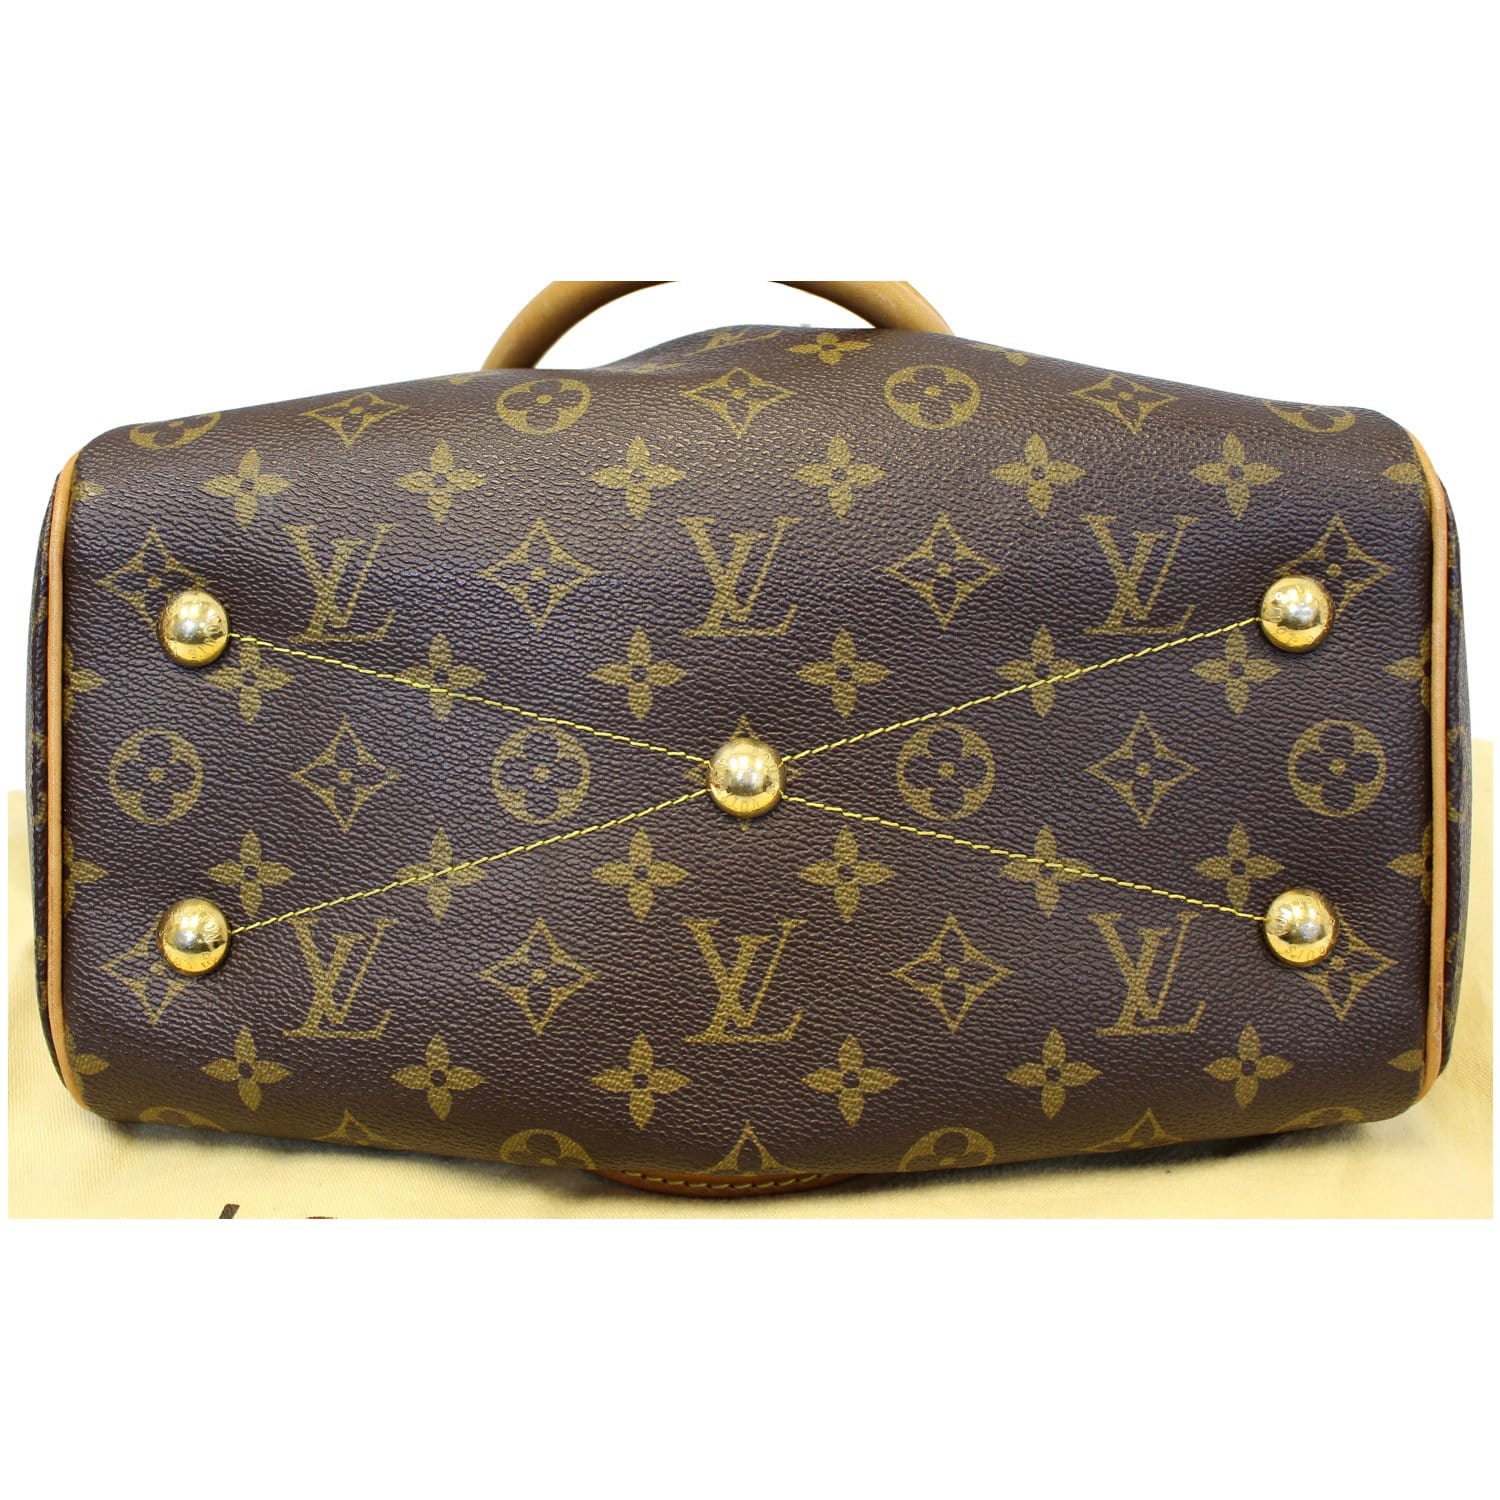 Tivoli leather handbag Louis Vuitton Brown in Leather - 37021100